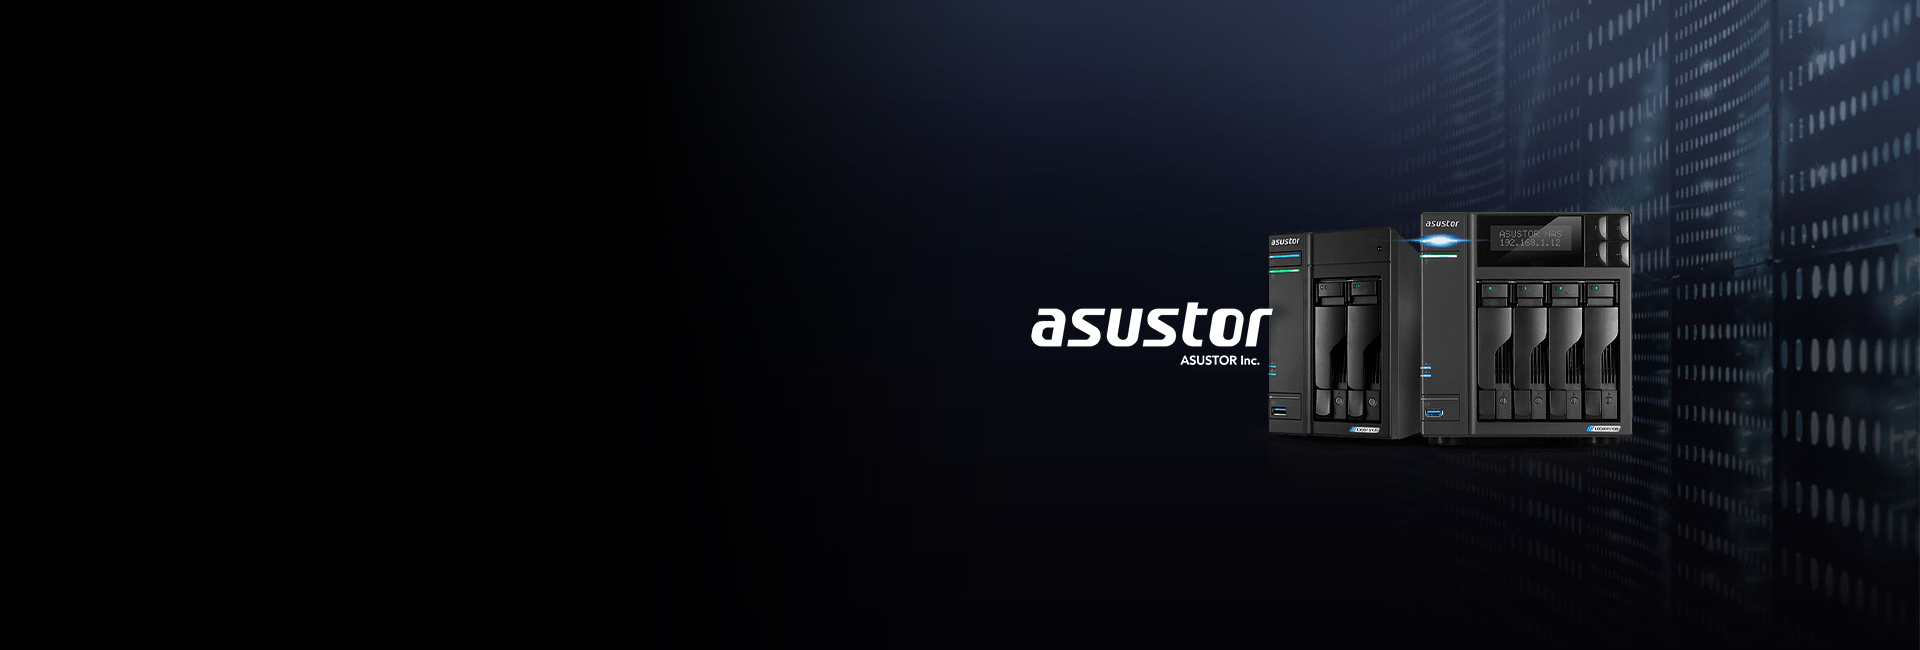 Why Choose Asustor?